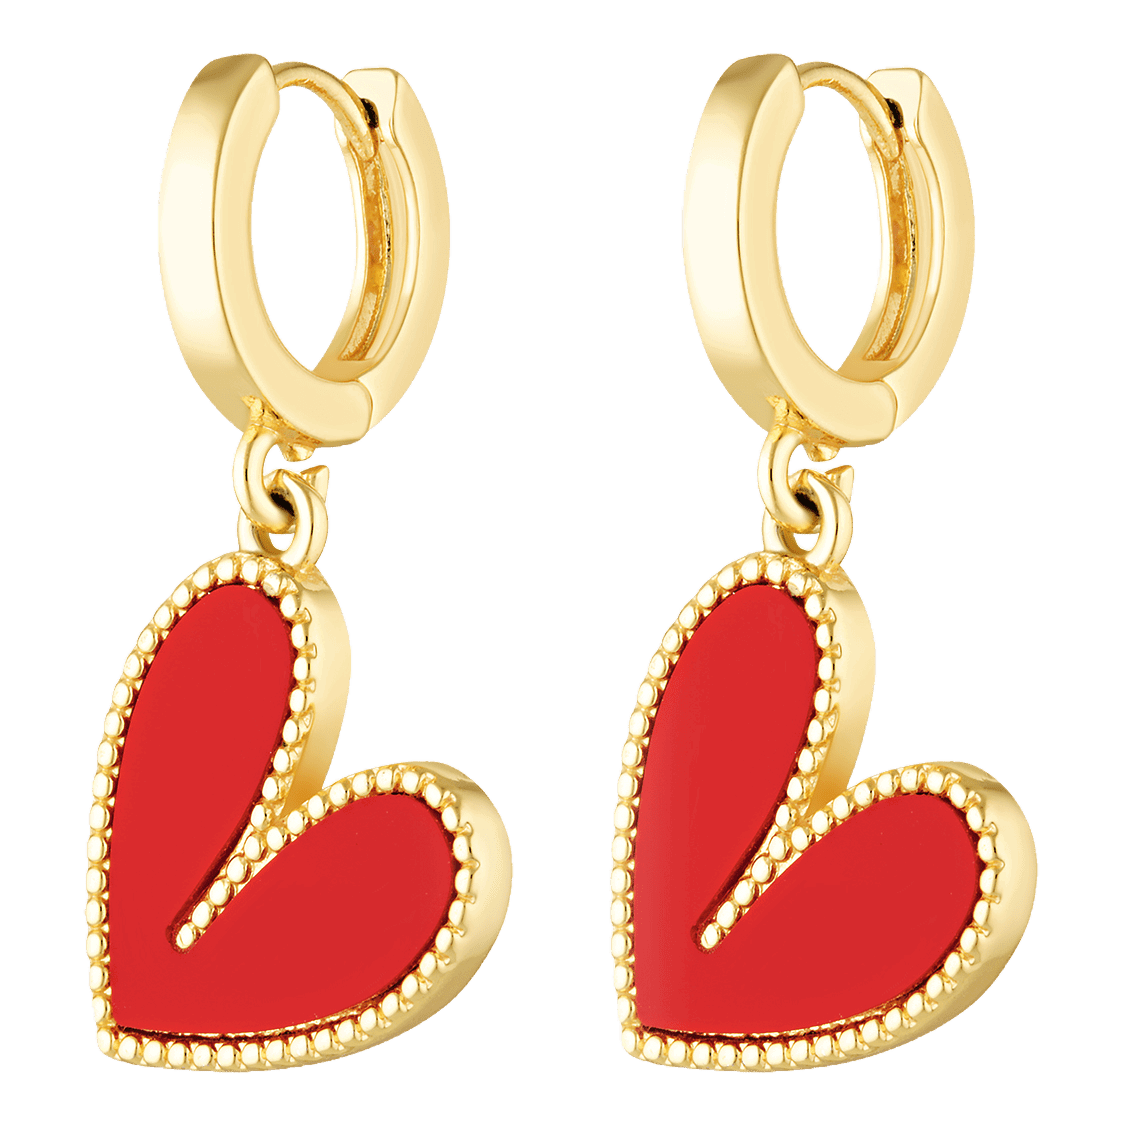 Cupid Hoops red heart shaped earrings 